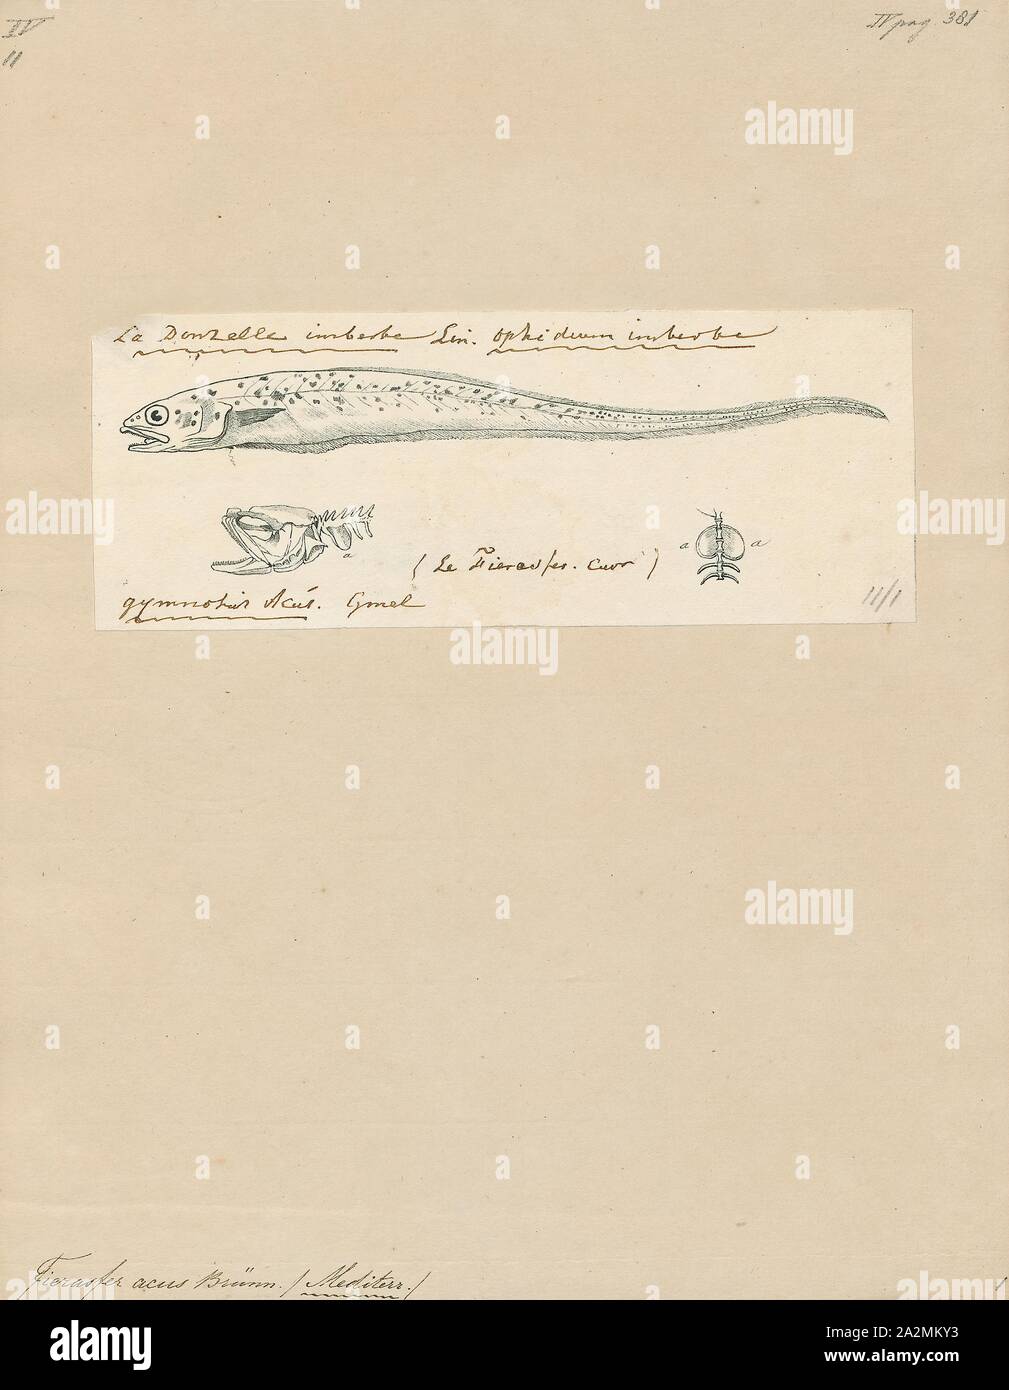 Fierasfer acus, Print, 1700-1880 Stock Photo